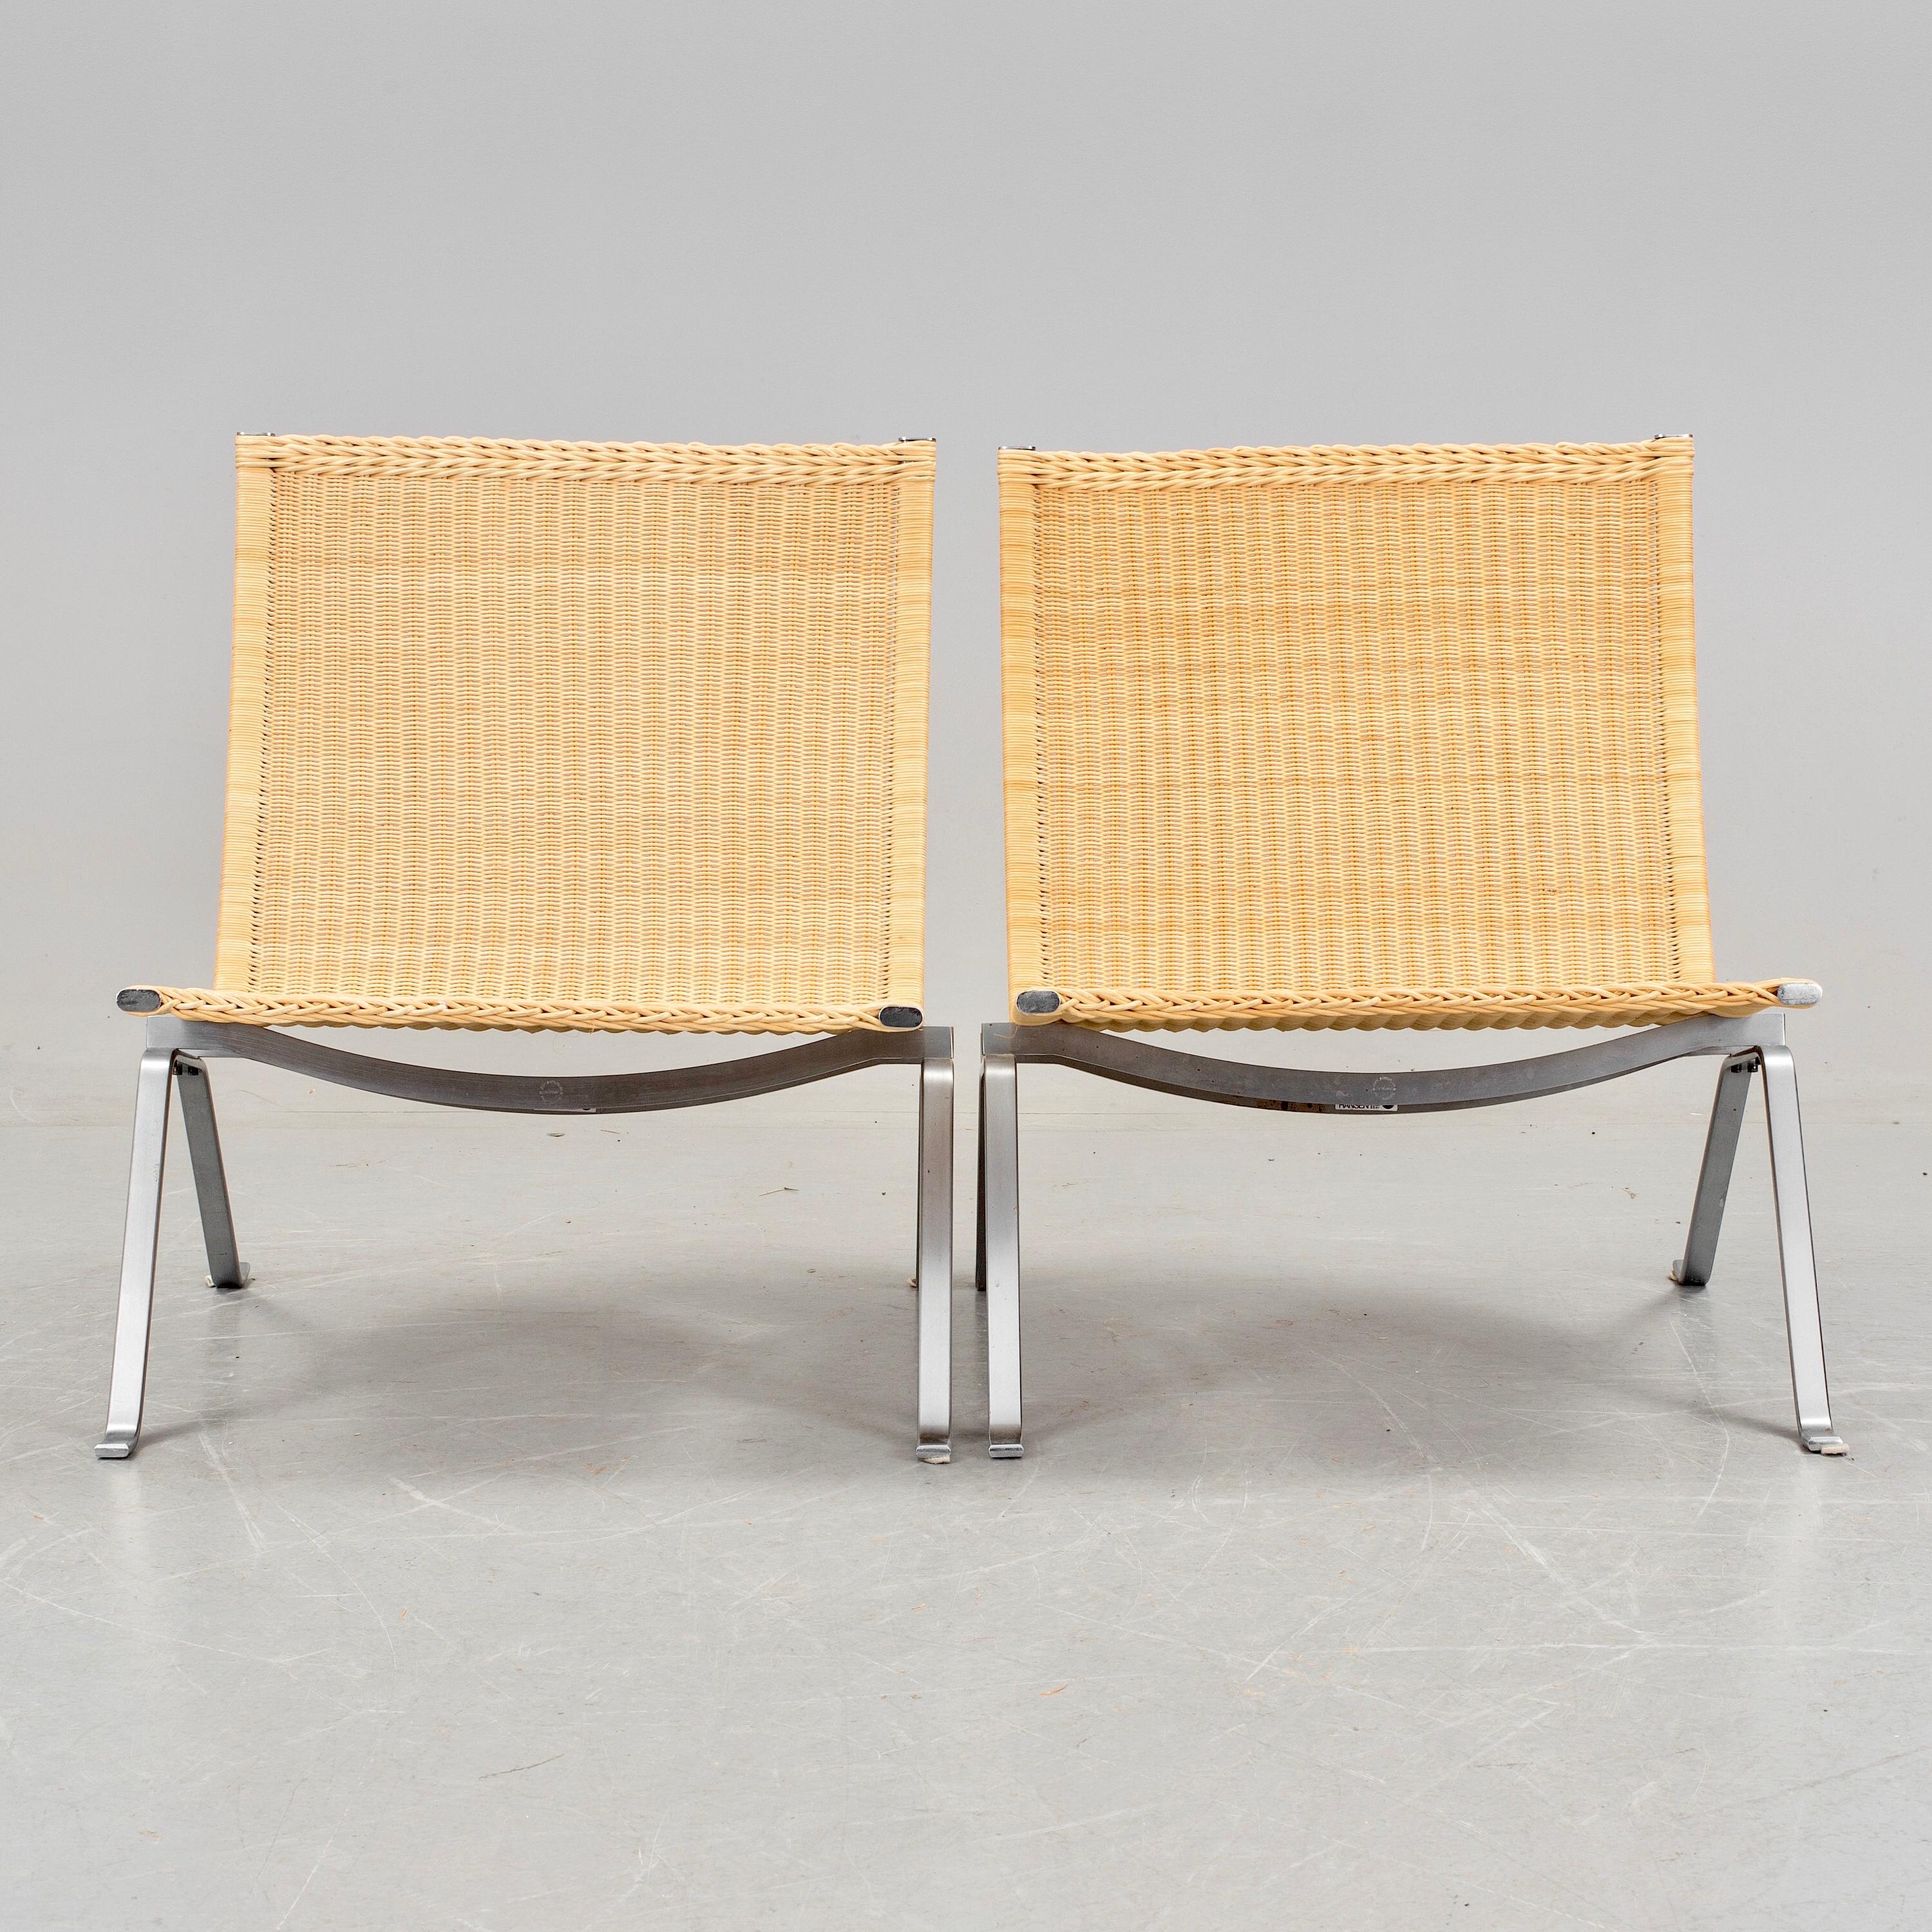 Pair of cane easy chairs model PK-22 designed by Poul Kjaerholm for E. Kold Christensen and produced in Denmark.